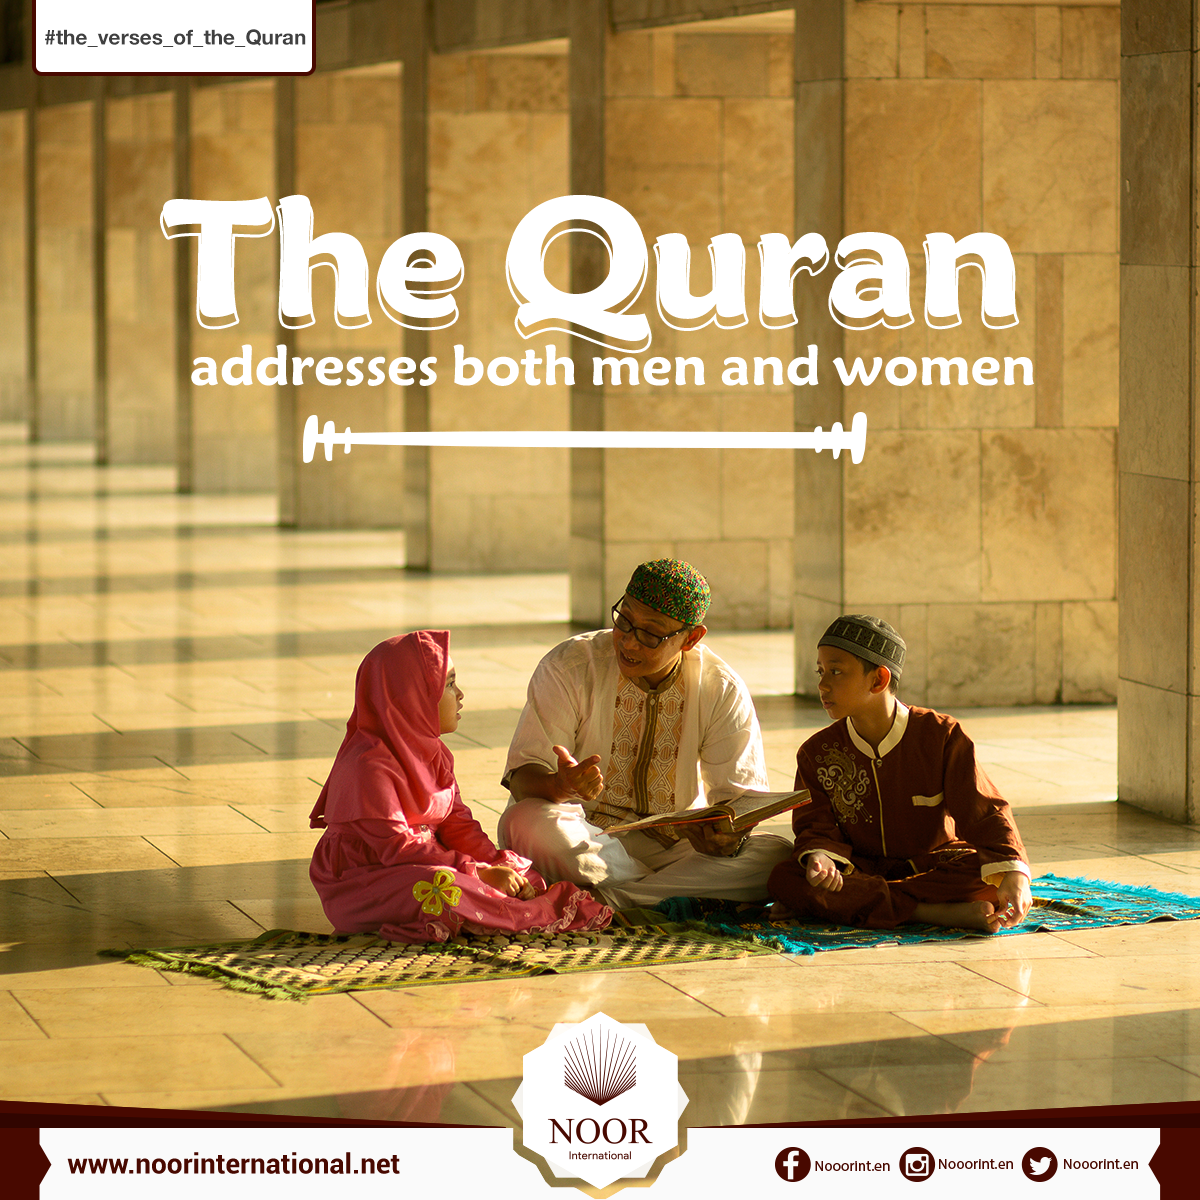 The Quran addresses both men and women